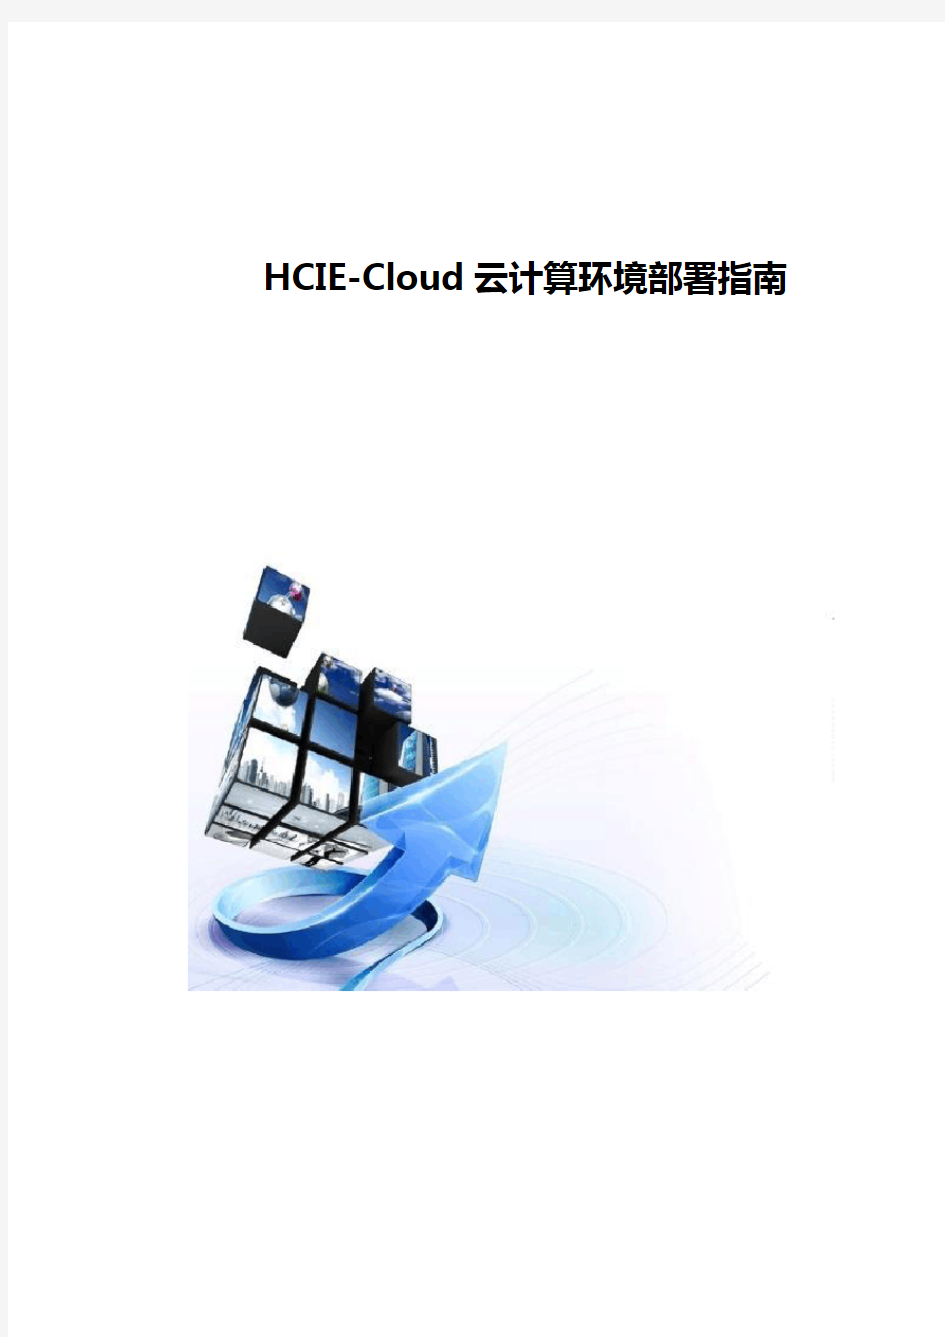 HCIE-Cloud云计算环境部署指南